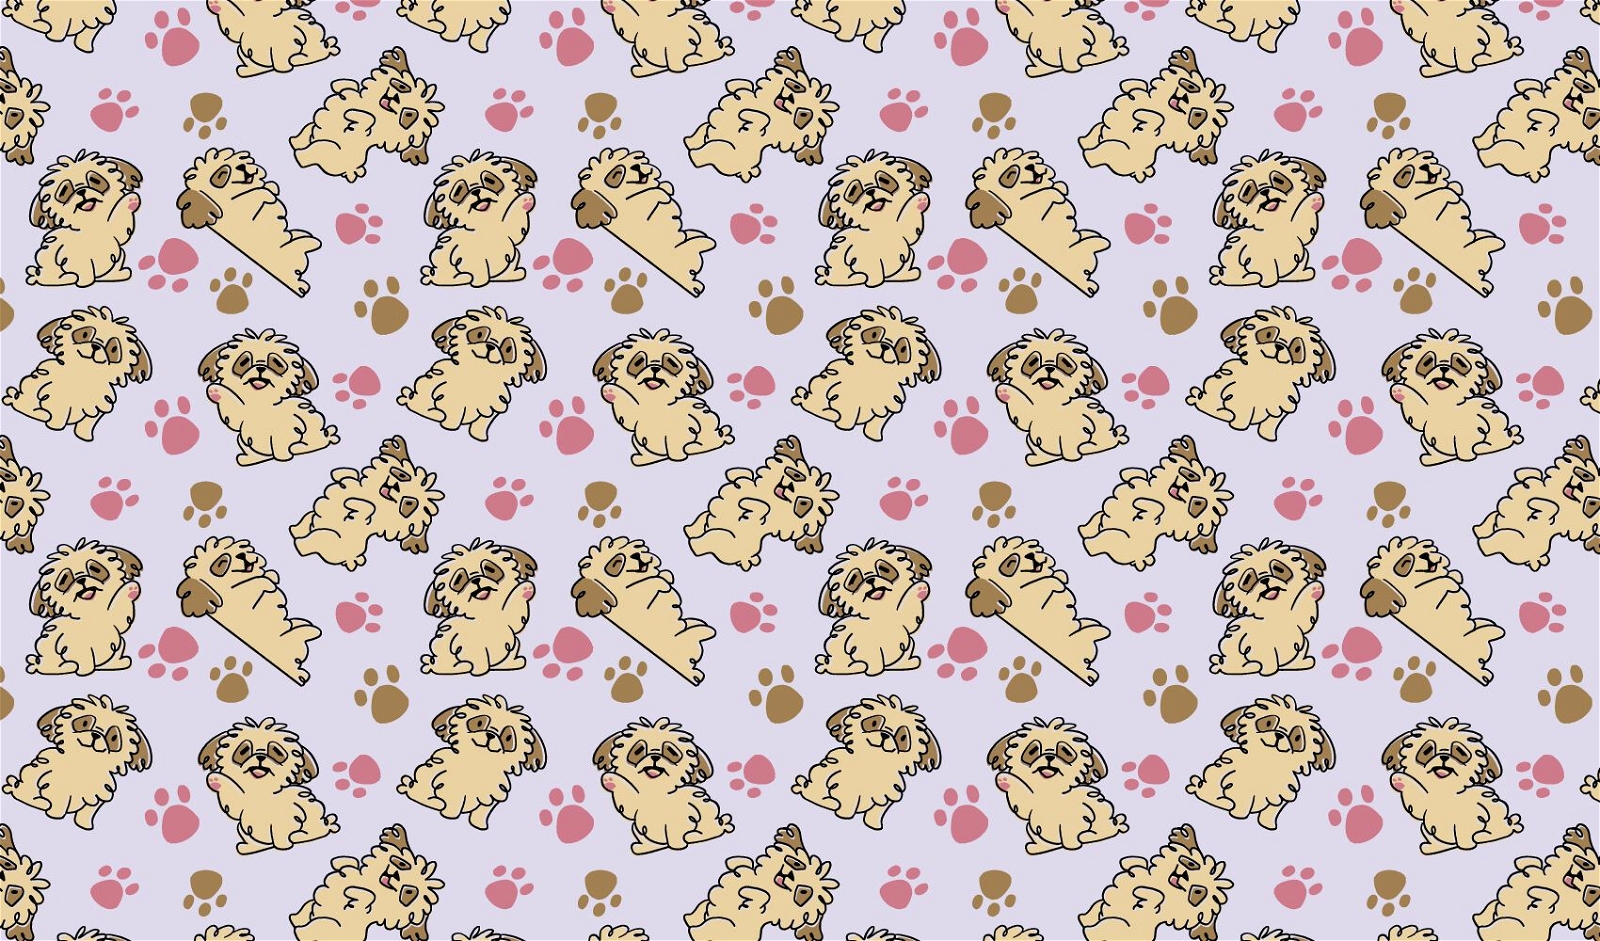 Cute puppy dog doodle pattern design